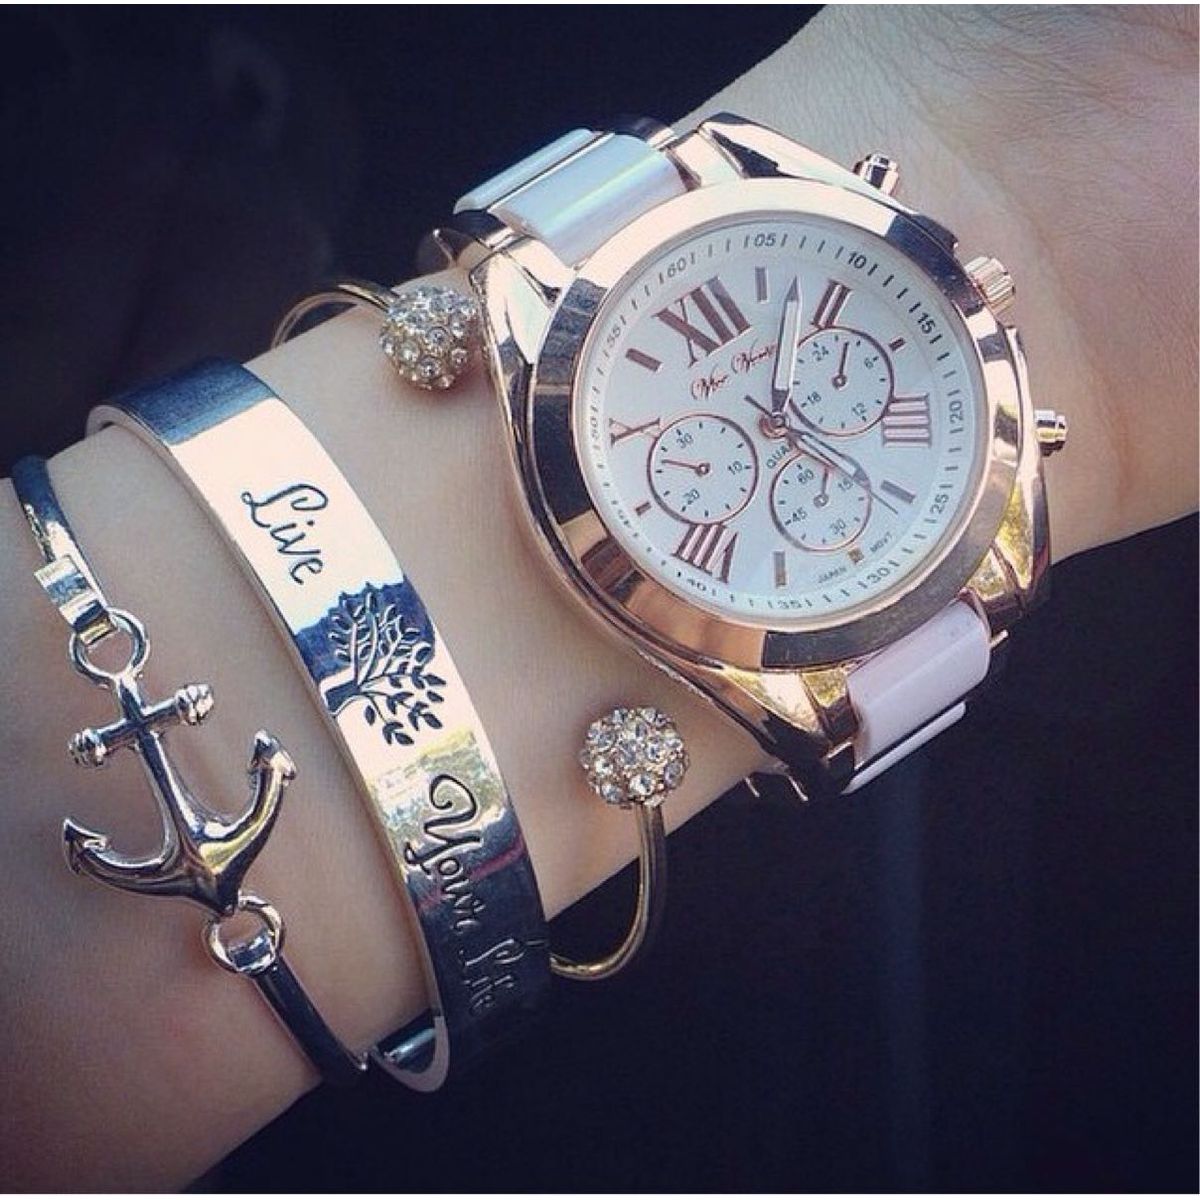 Buy Female fancy Watch in White at Lowest Price - FEFAWA6401ROQ053377 ...